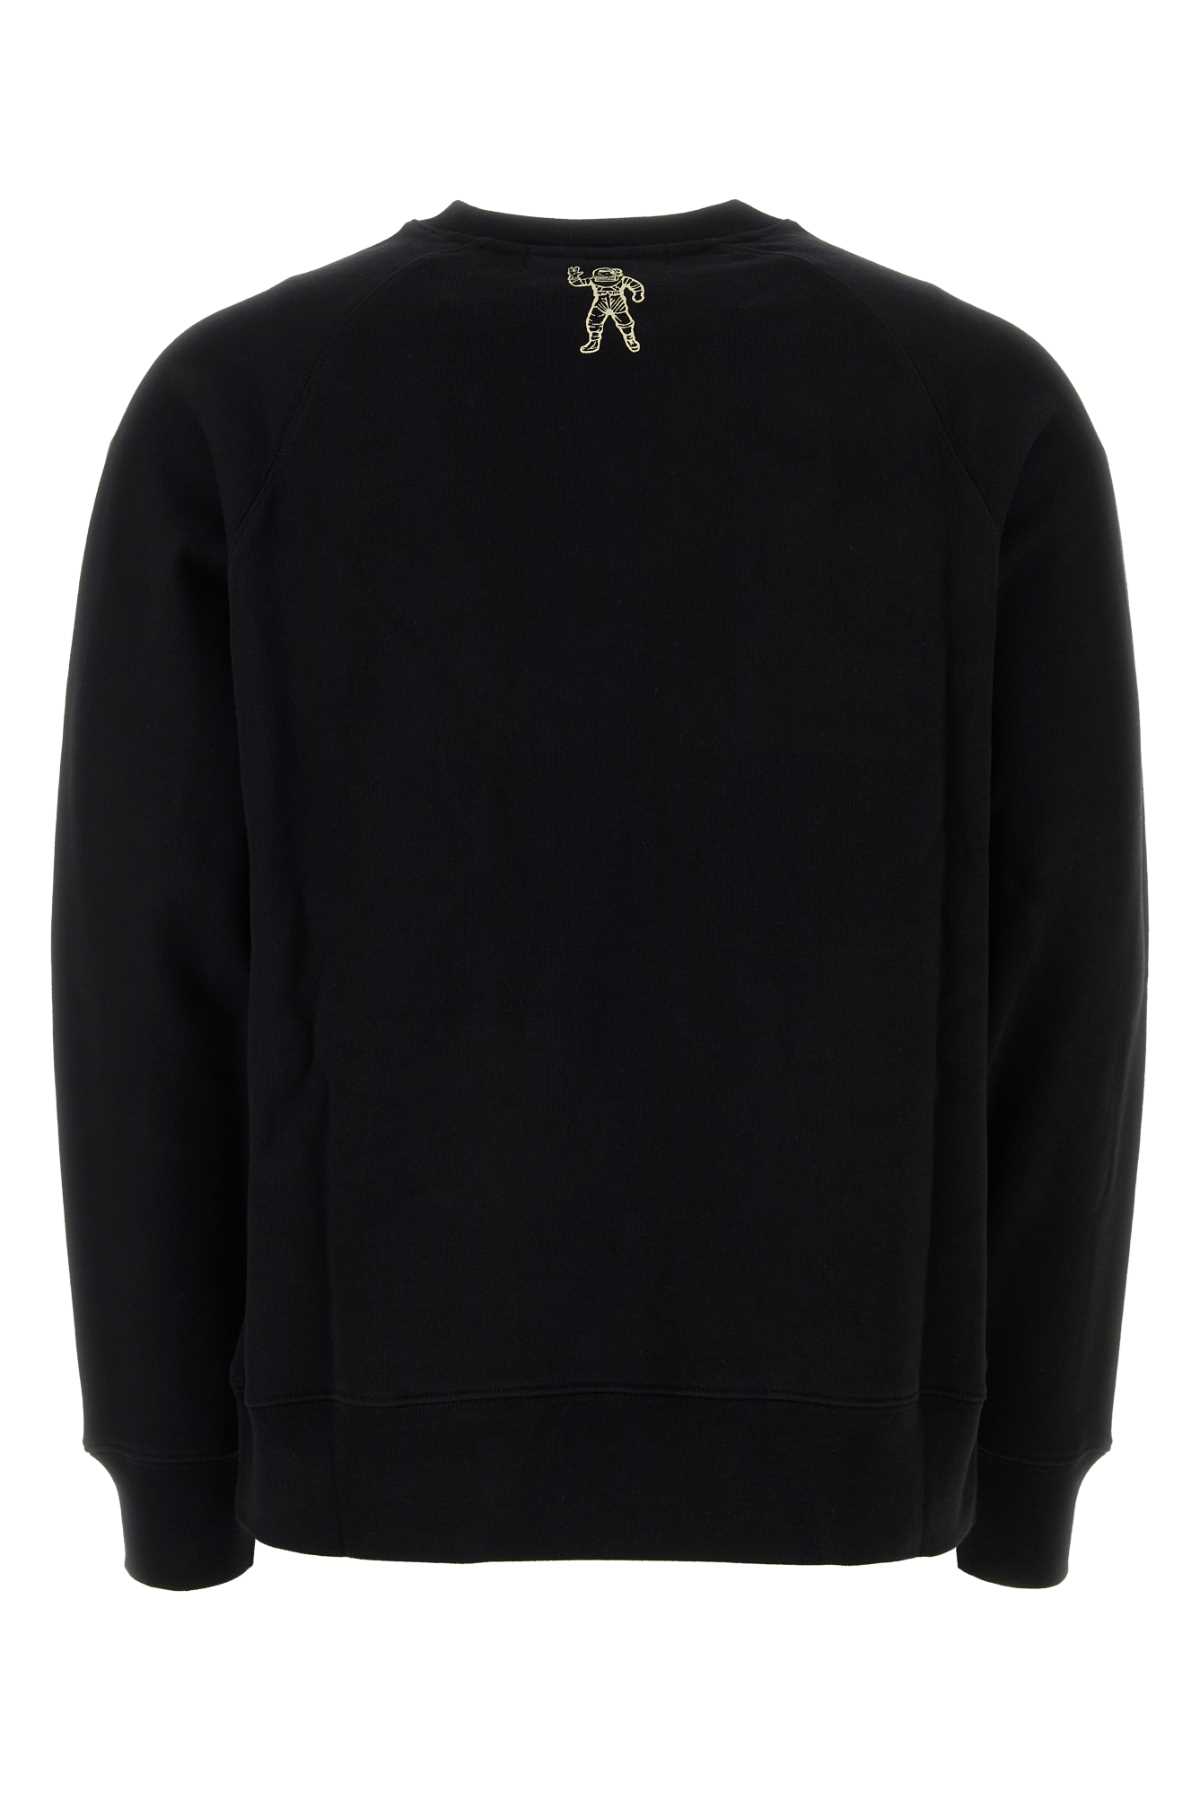 Billionaire Boys Club Black Cotton Sweatshirt